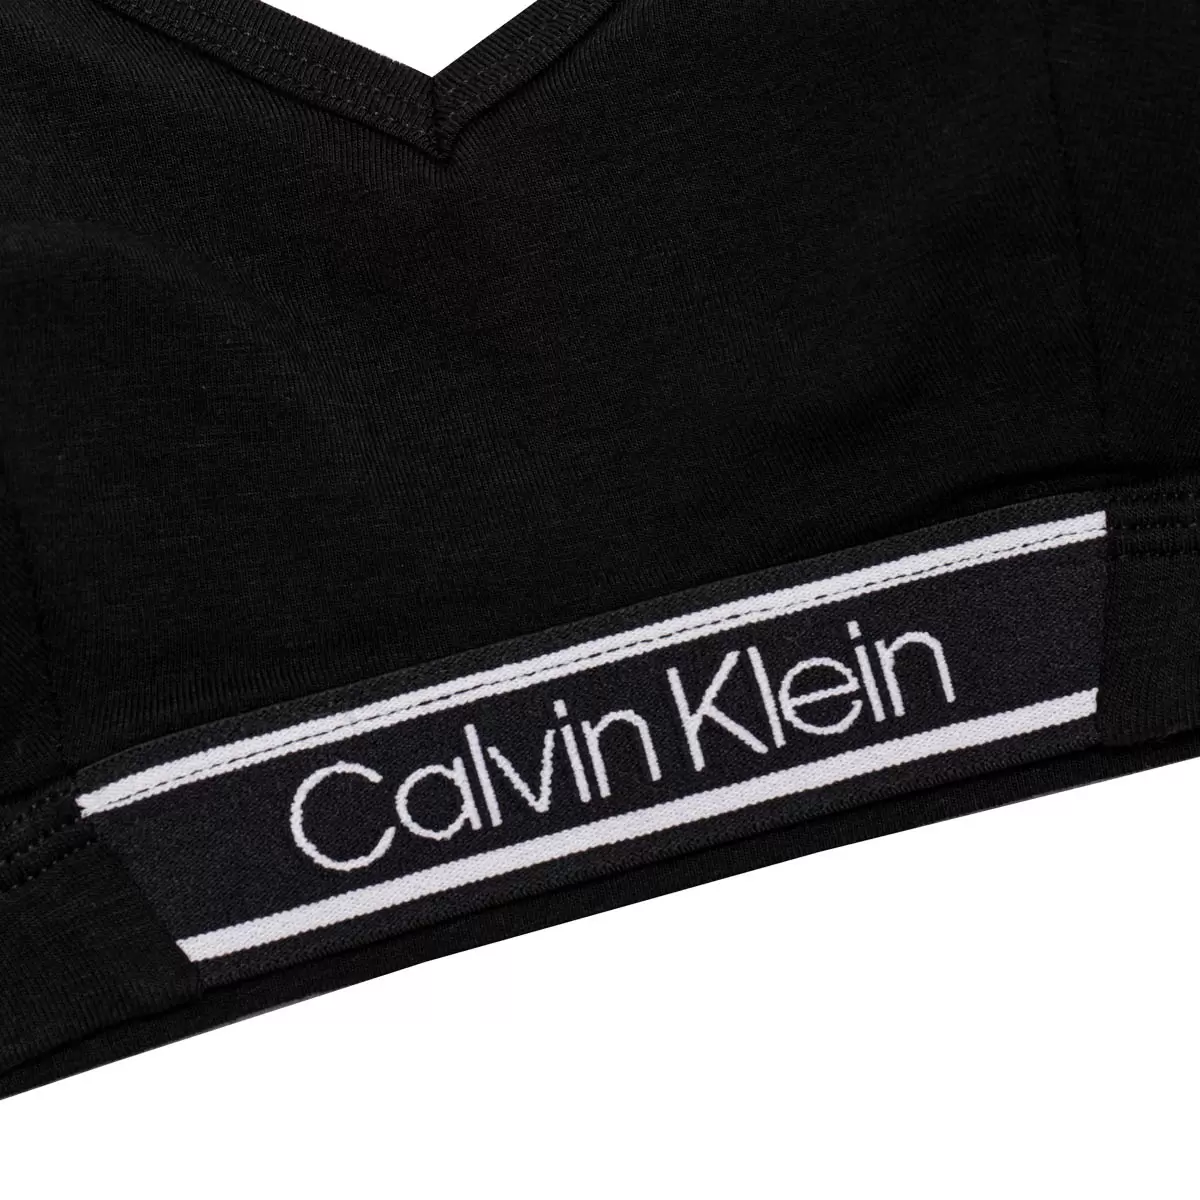 Calvin Klein 女無鋼圈內衣 兩件組 黑 / 藍 M